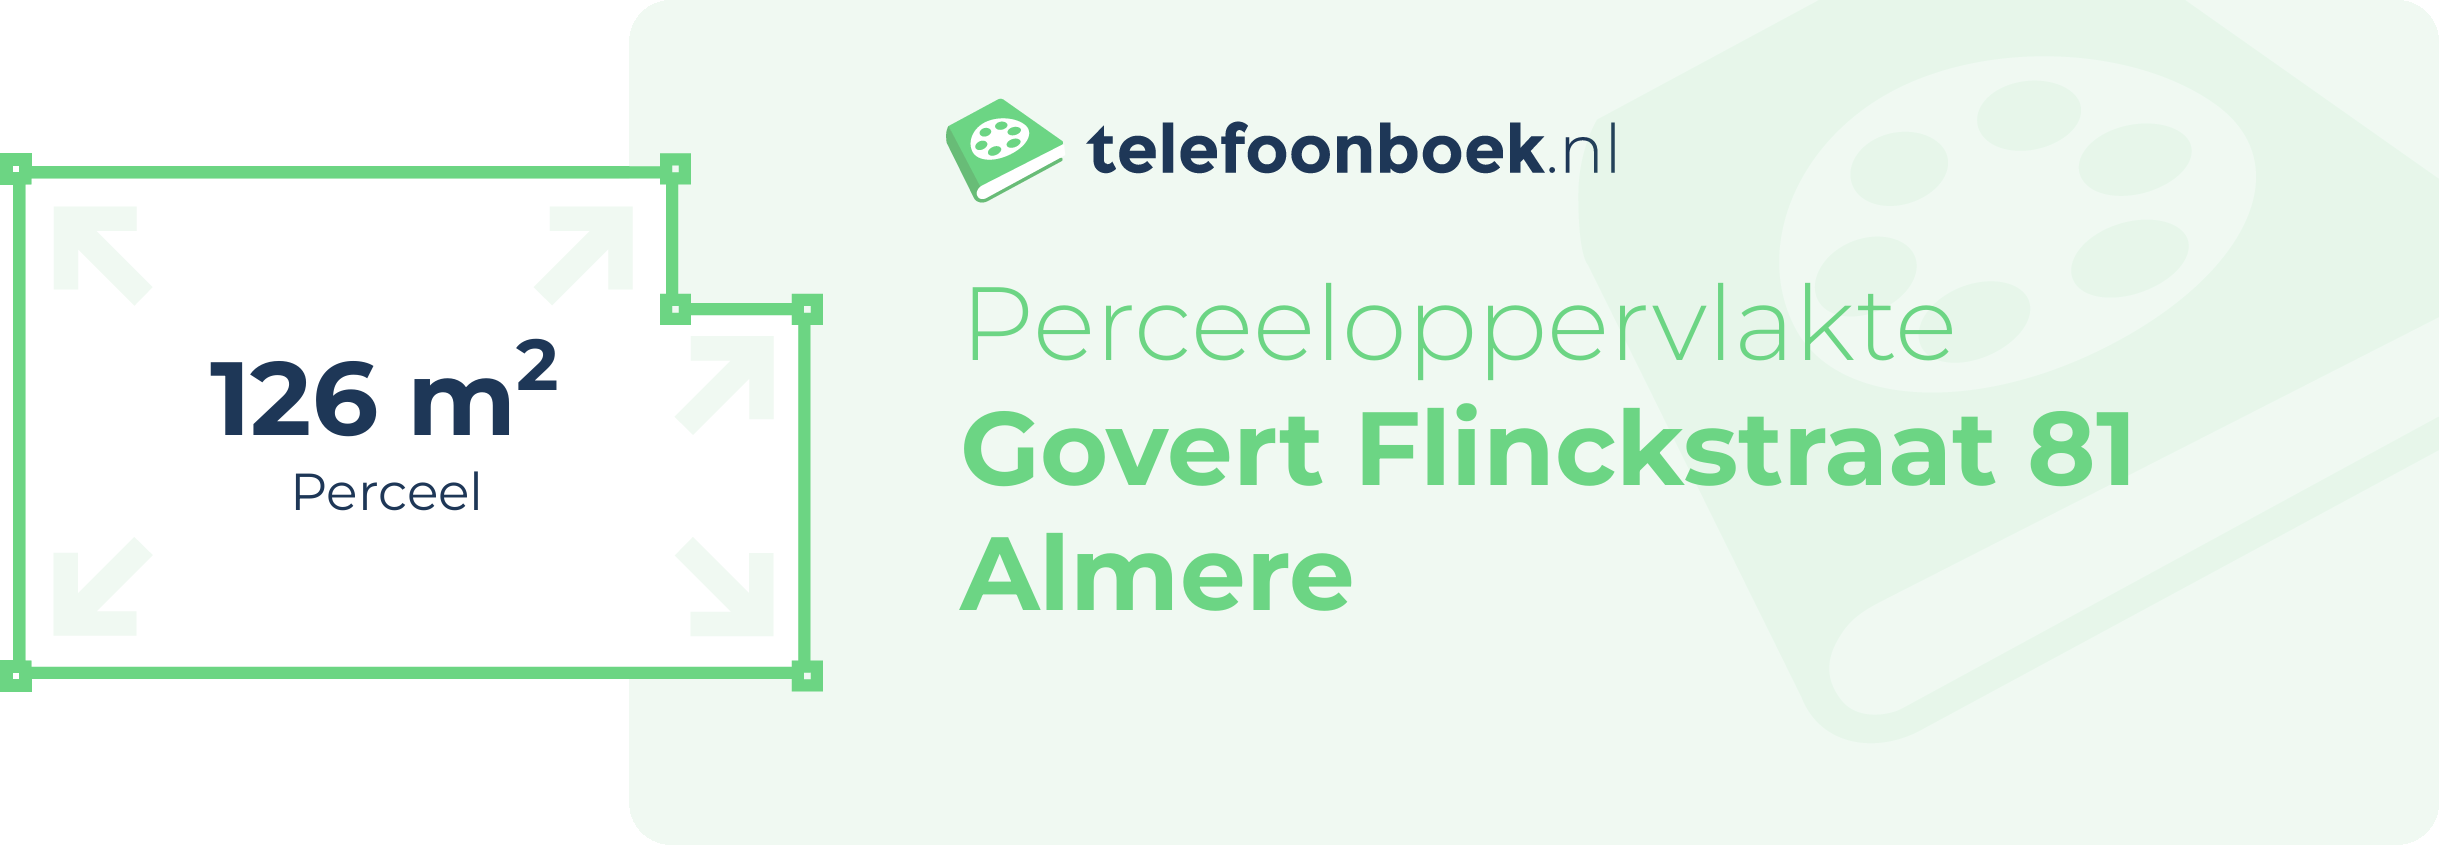 Perceeloppervlakte Govert Flinckstraat 81 Almere